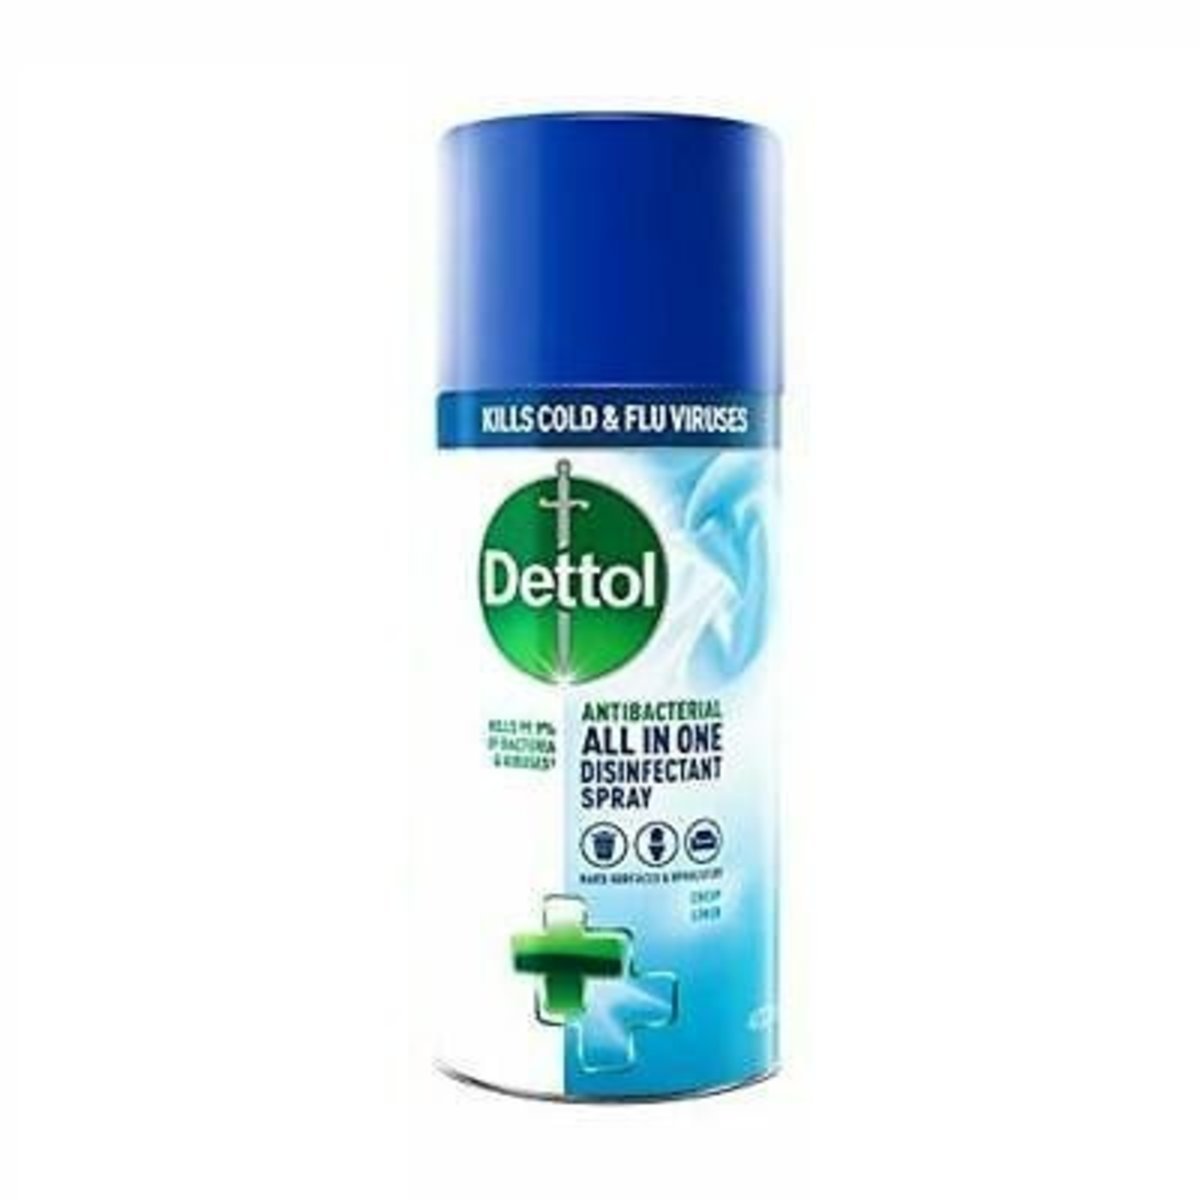 Dettol 99.9% 殺菌消毒噴霧400ml (藍) - 柔香香味 [平行進口產品]  